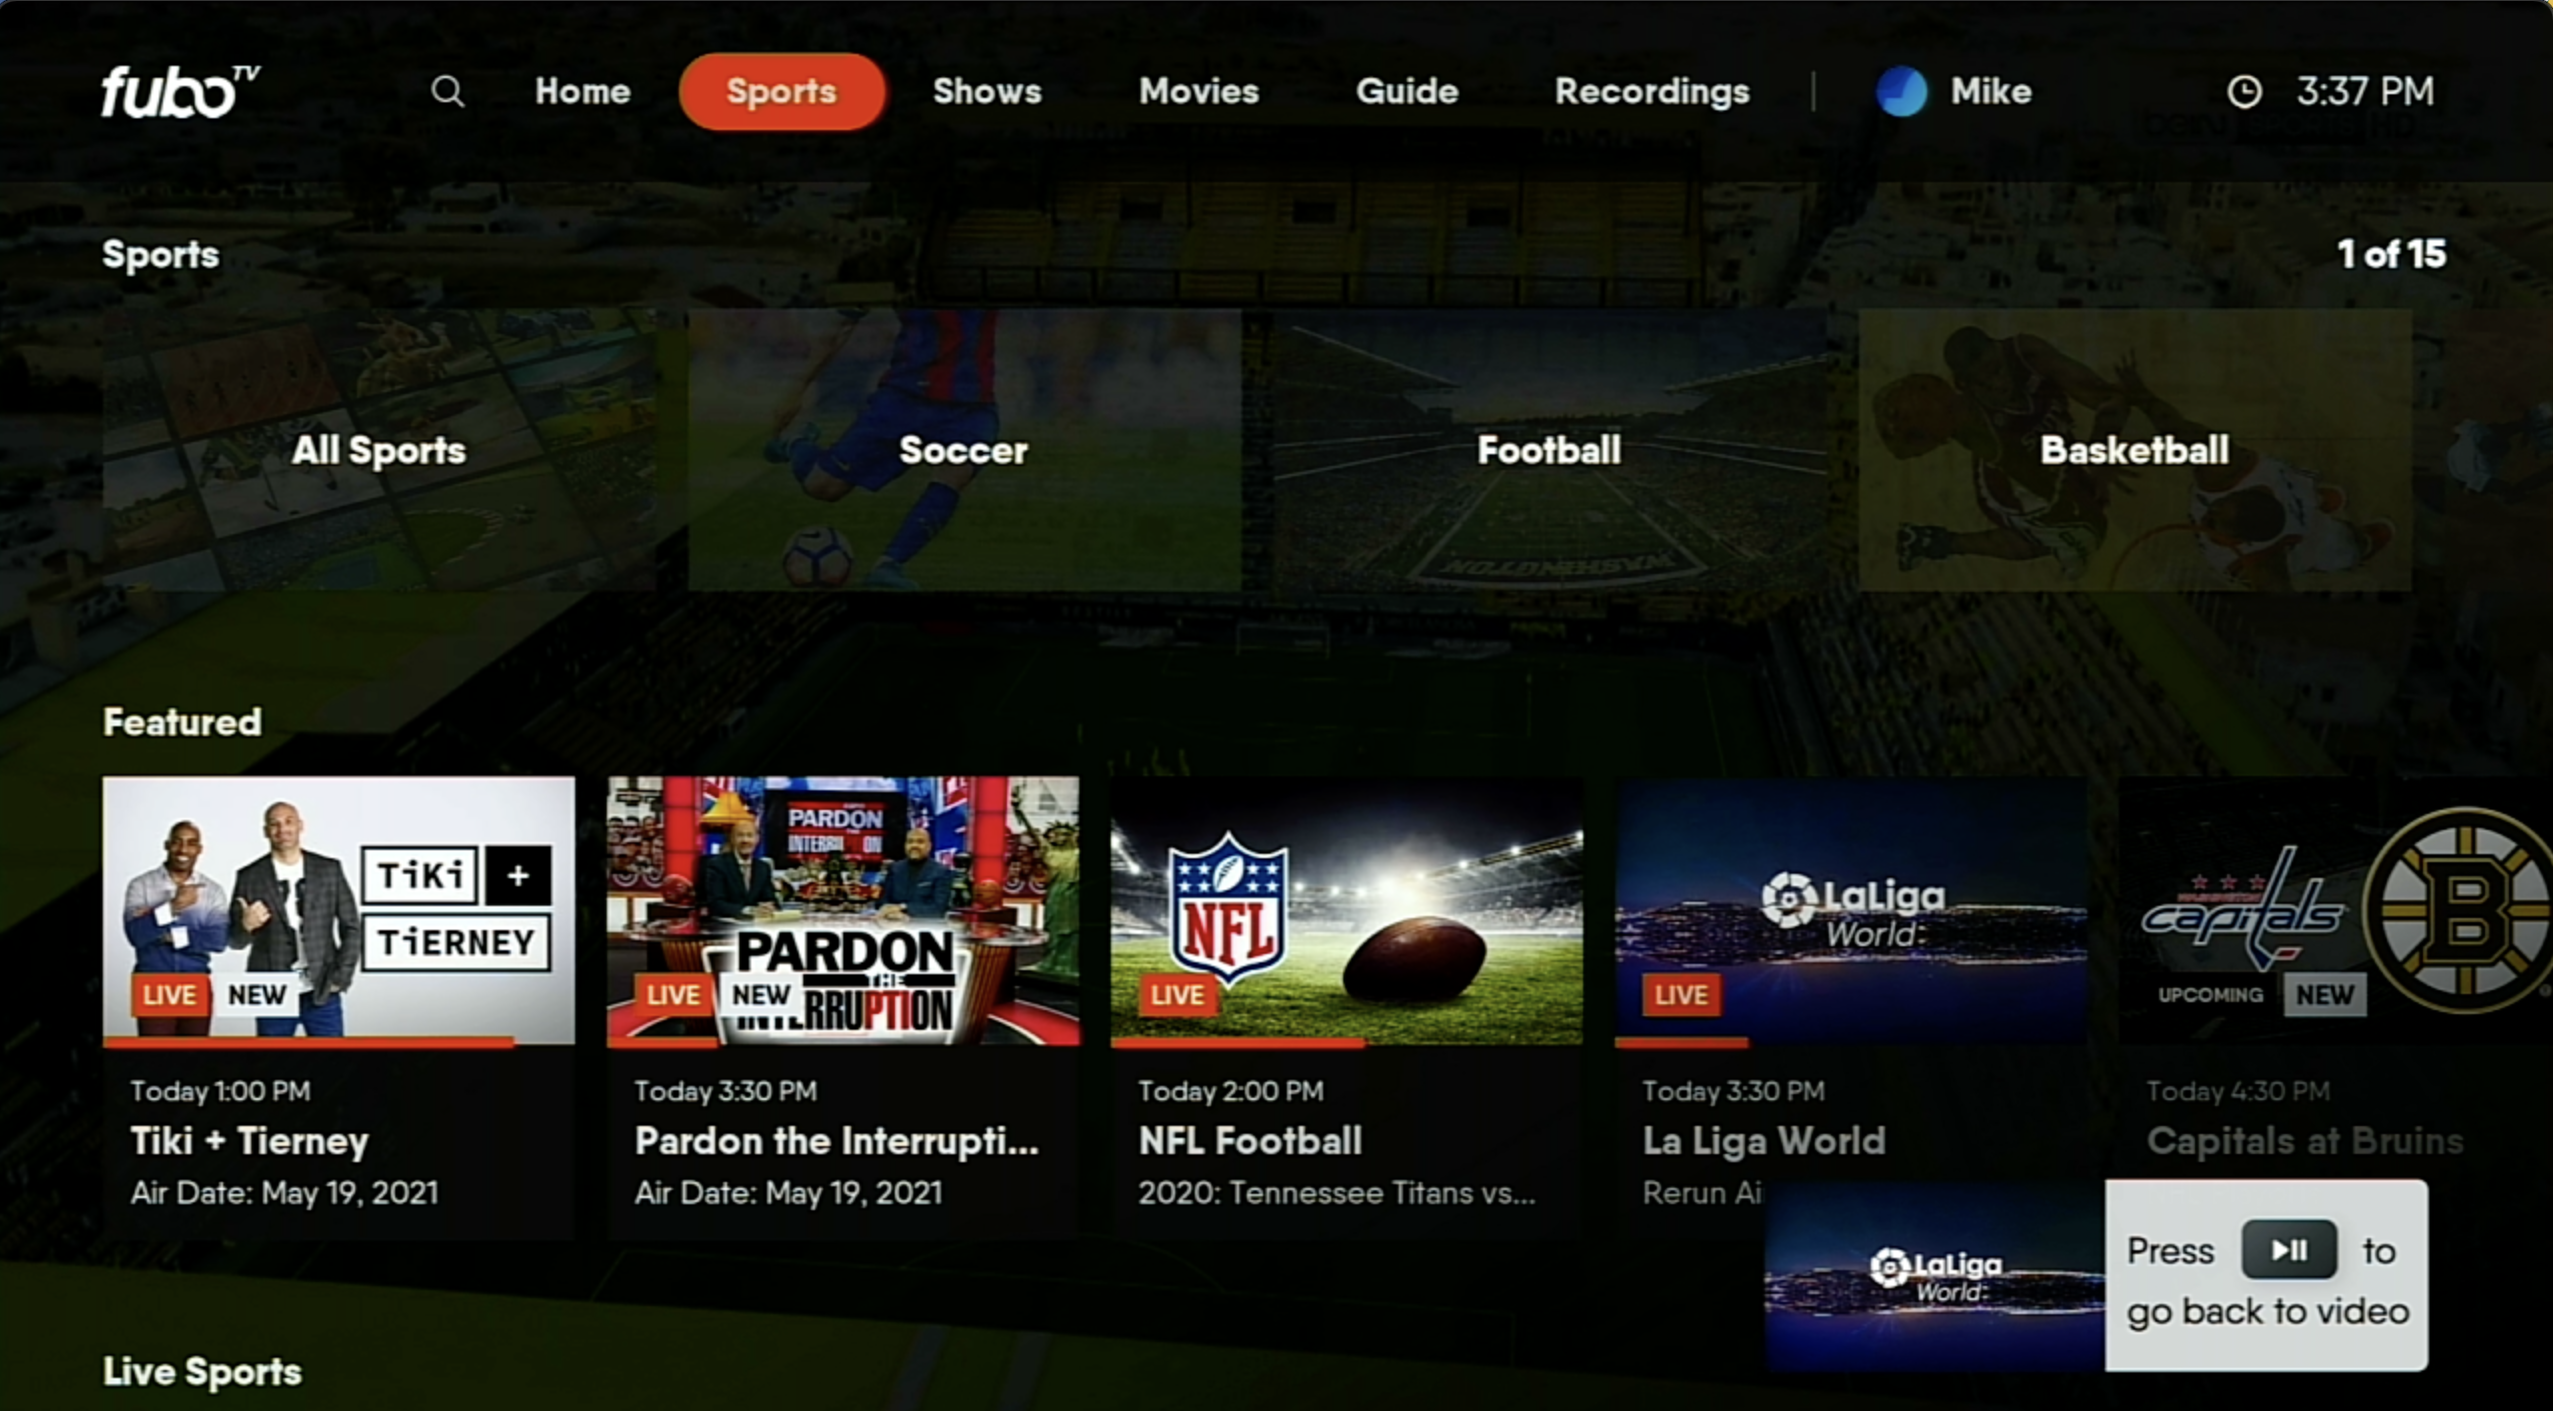 SPORTS screen of the FuboTV app on Roku